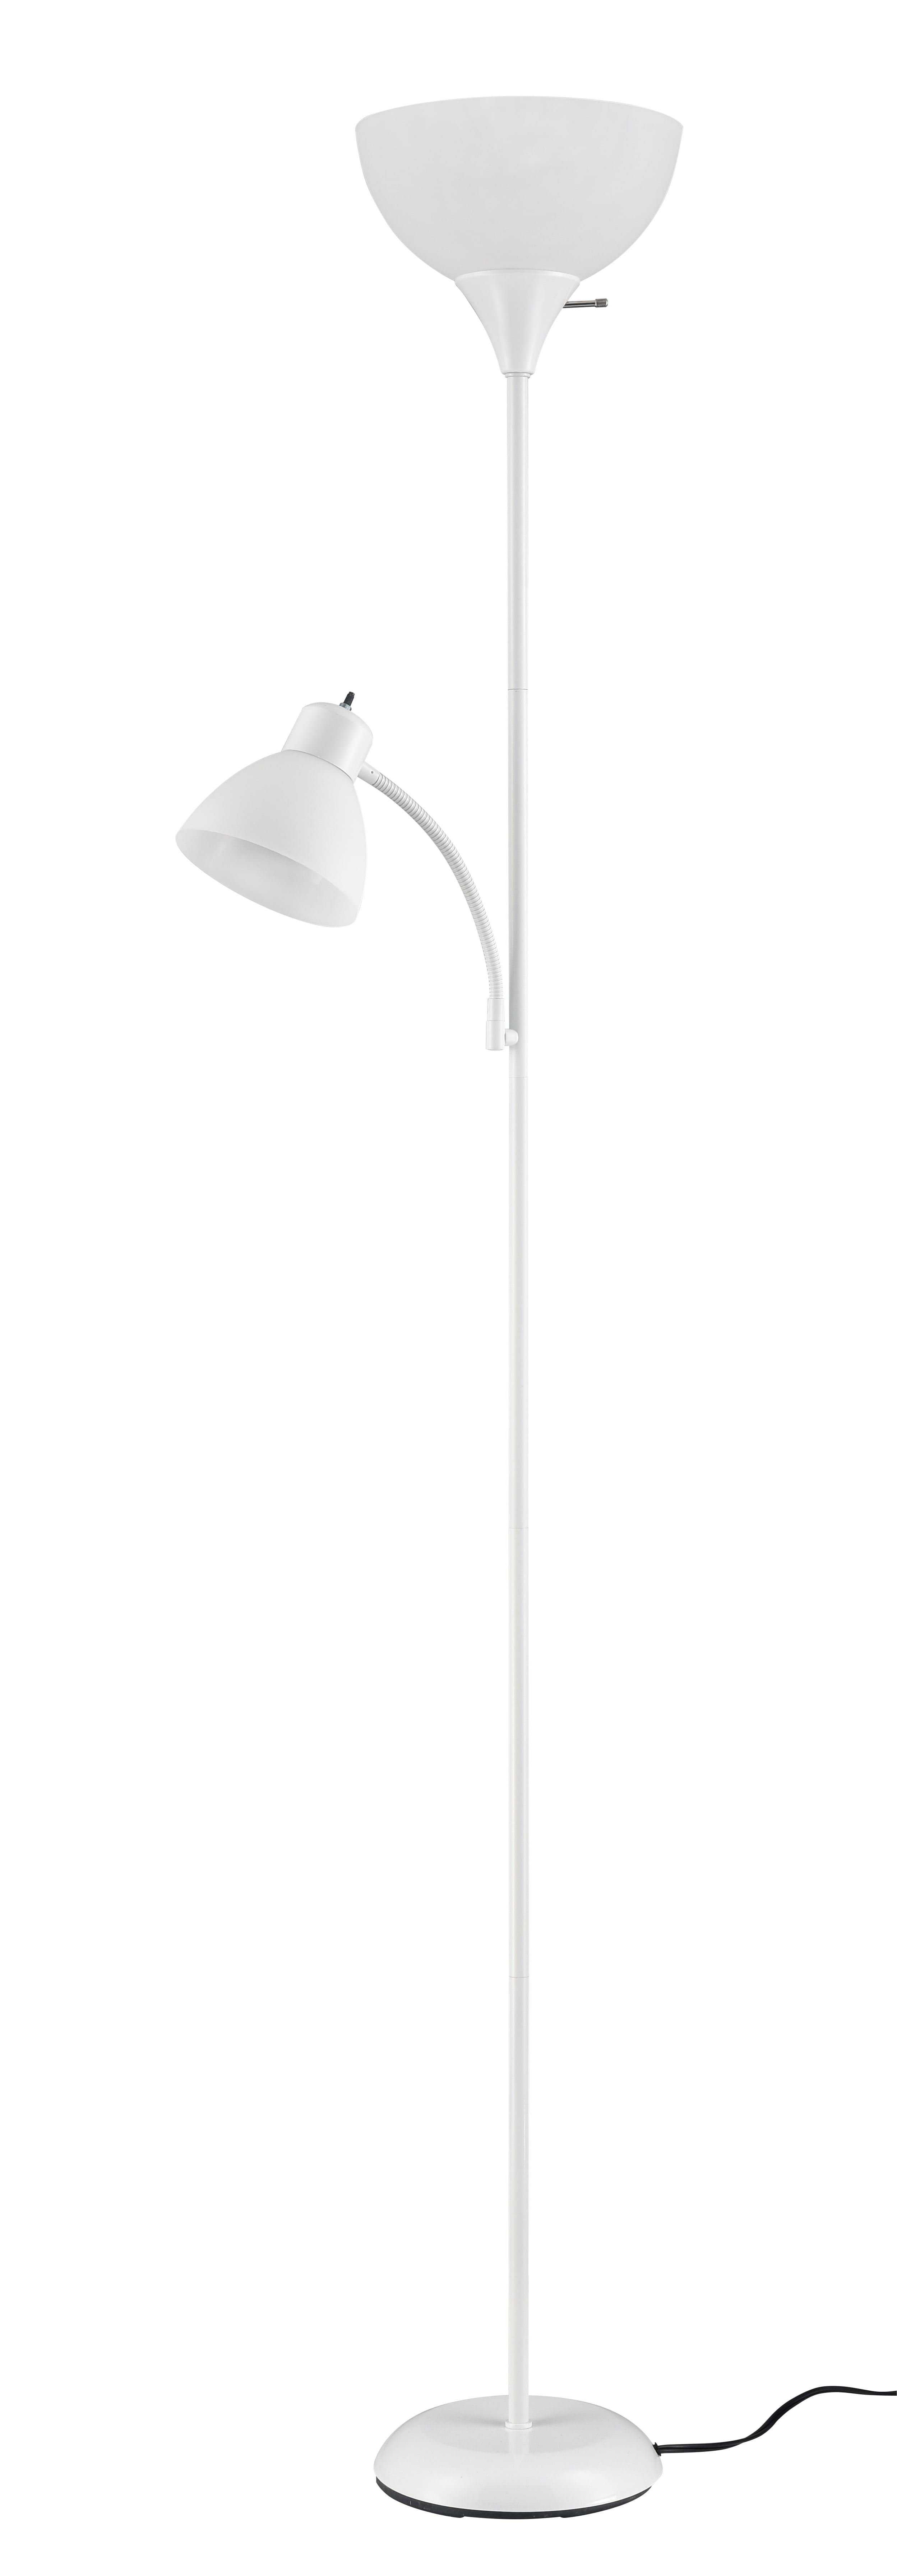 Mainstays 72" Combo Floor Lamp White Finish, White Plastic Shades